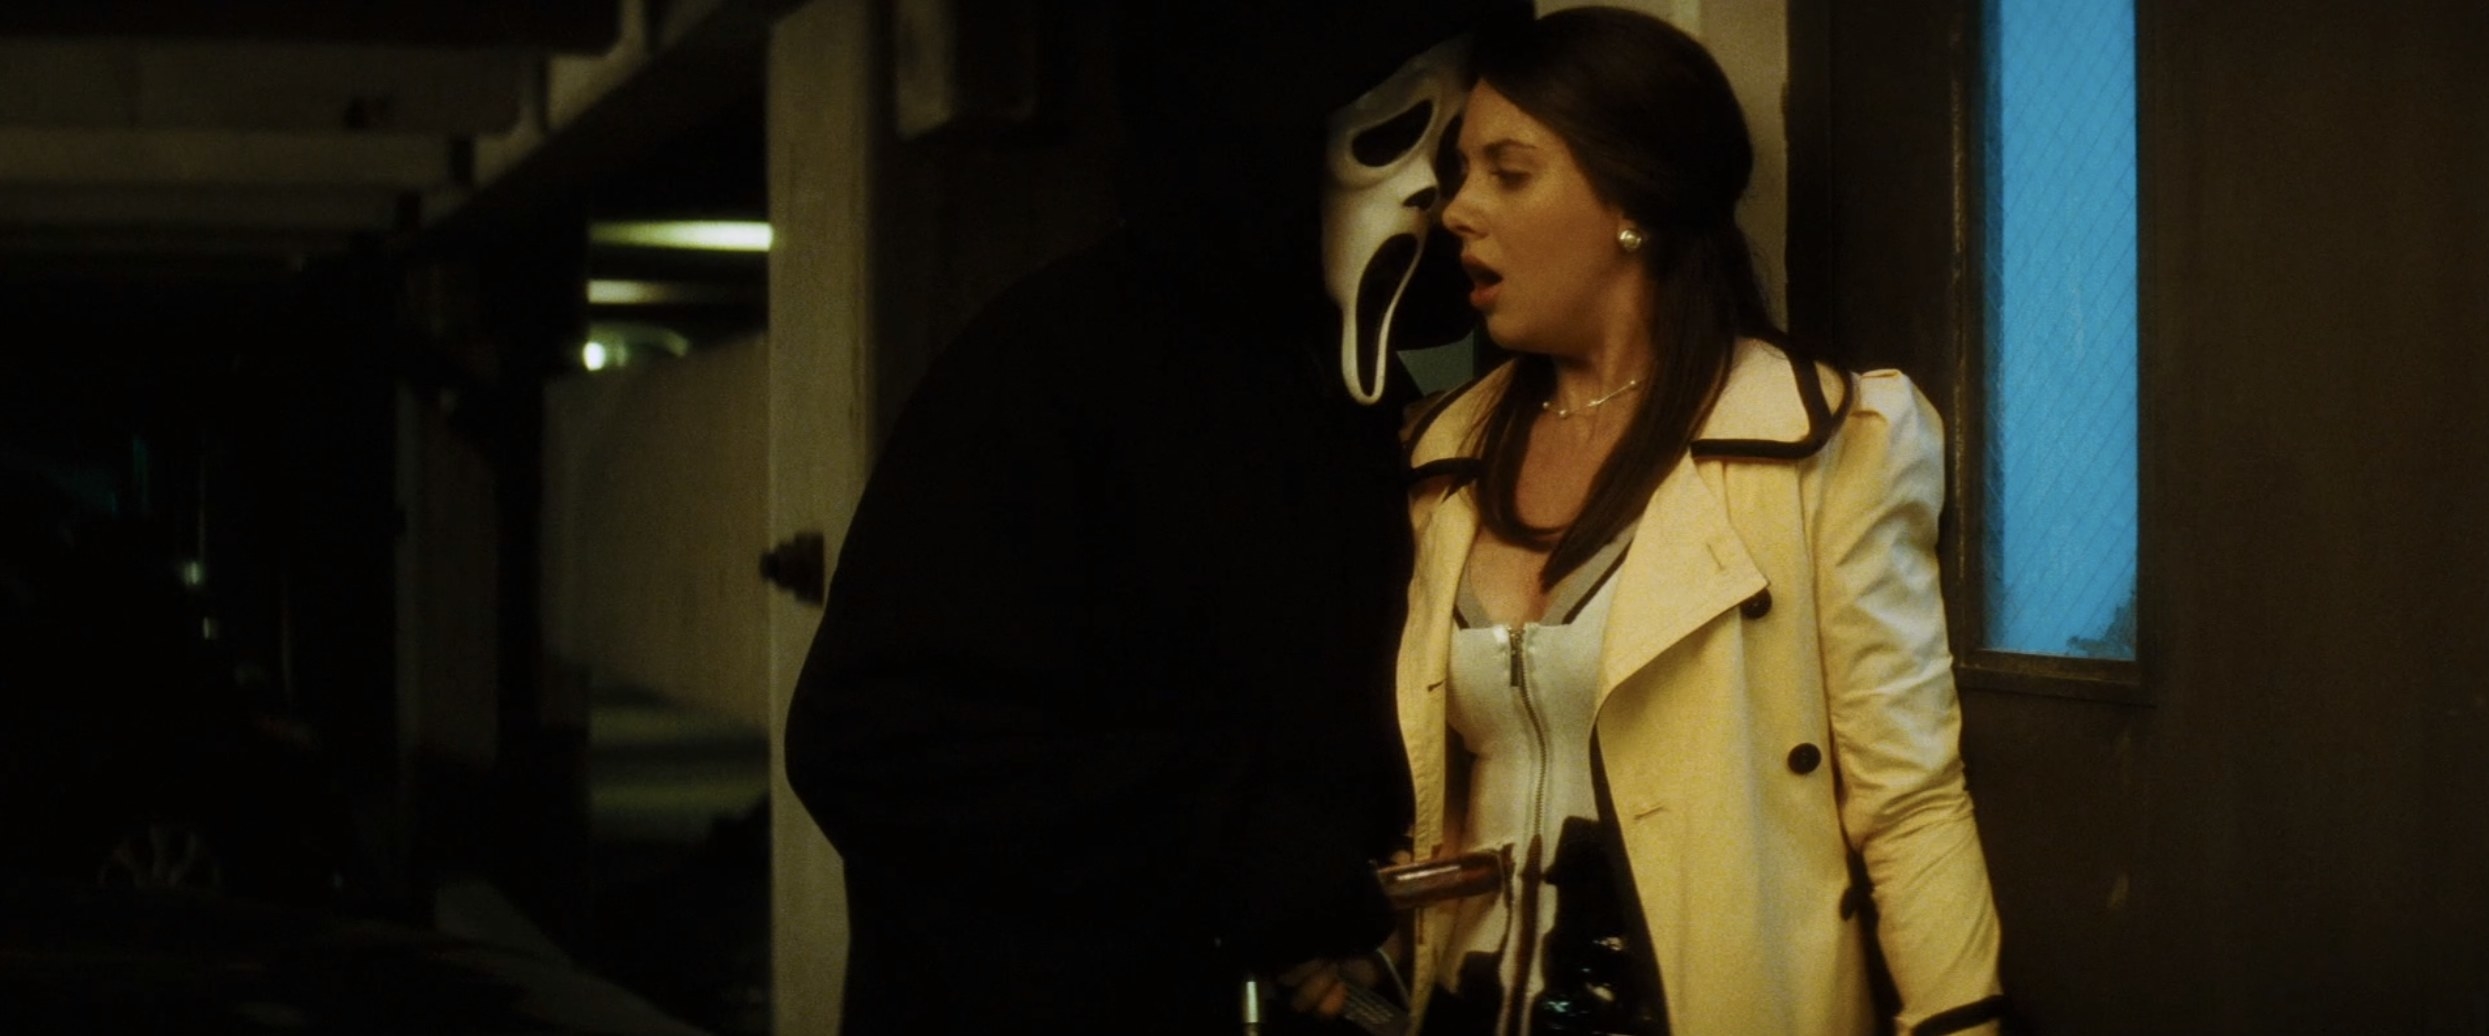 Rebecca being stabbed in Scream 4